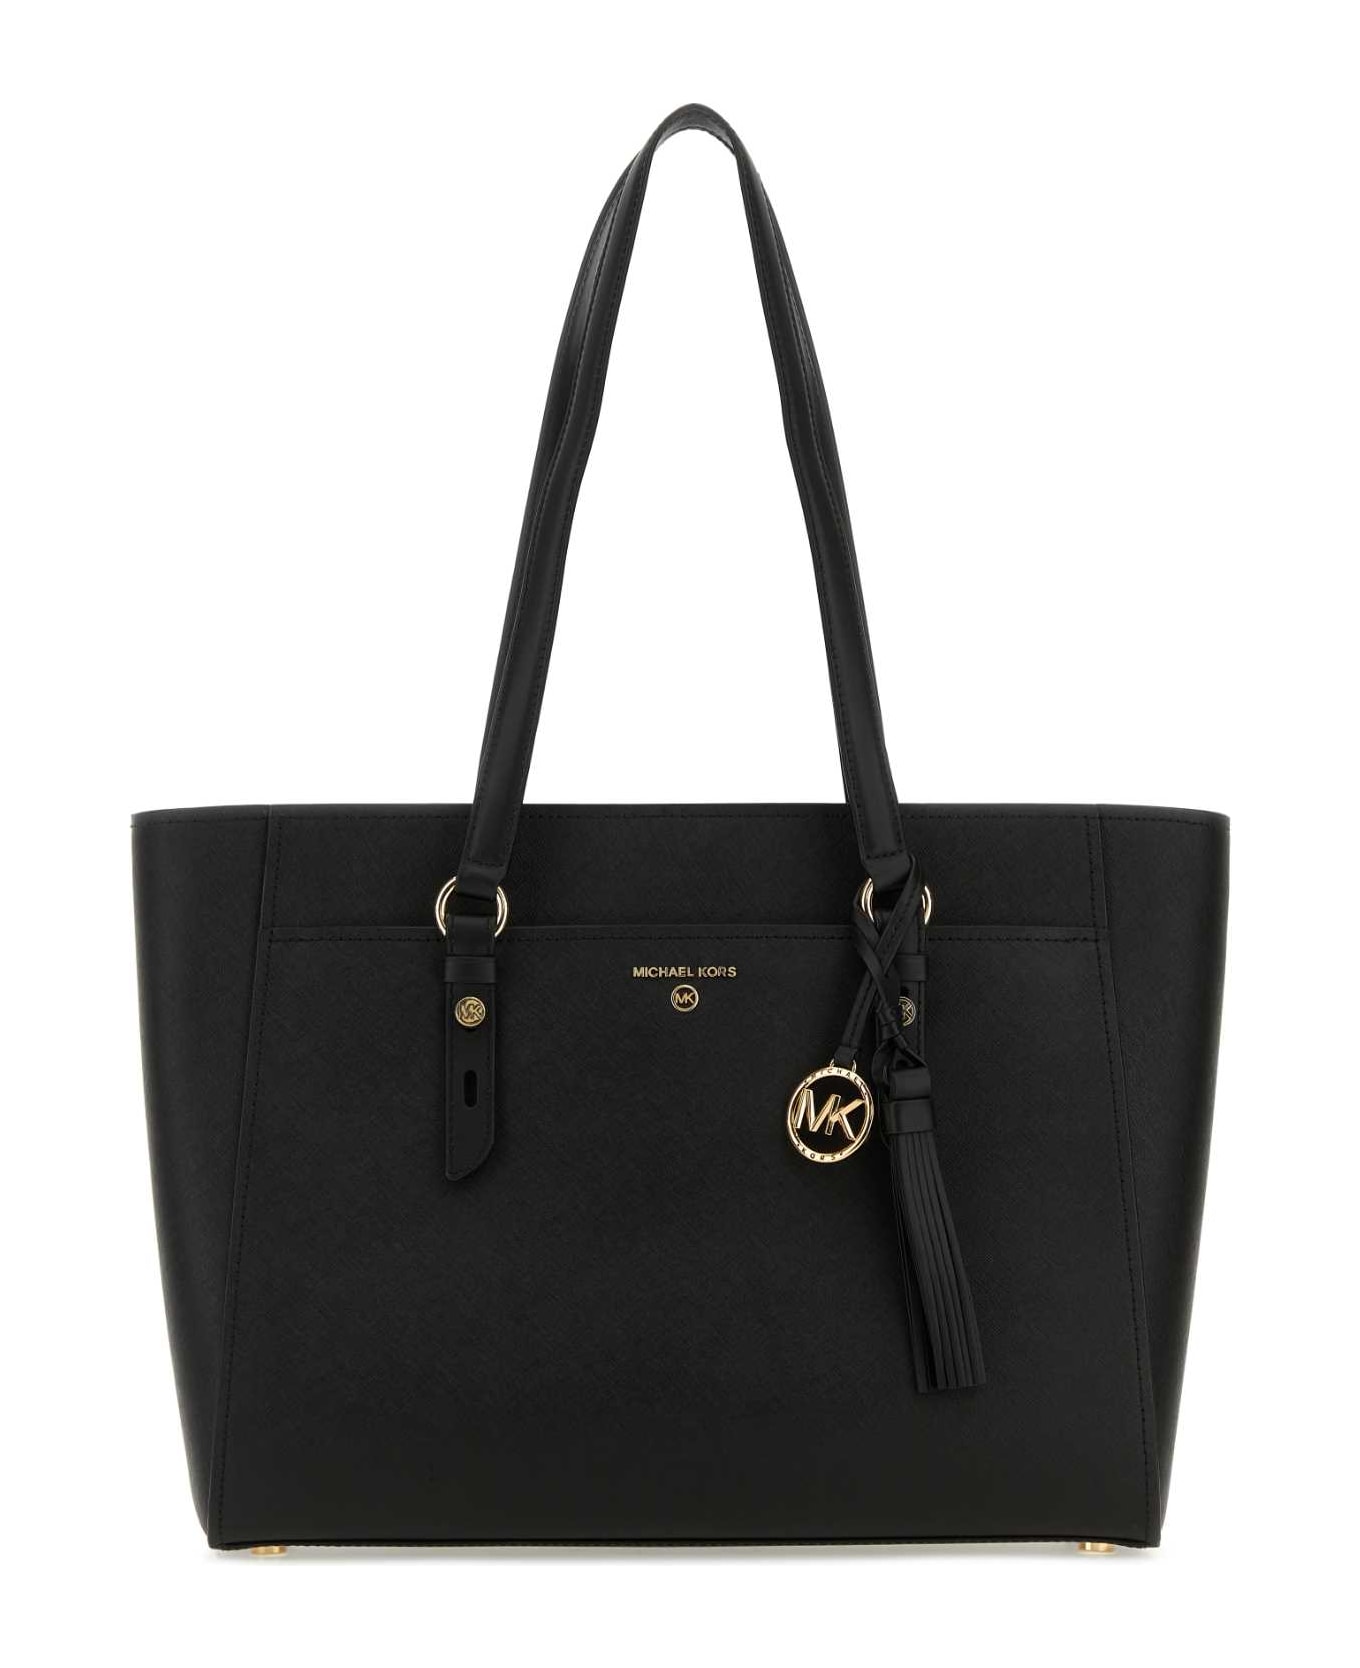 Michael Kors Black Leather Large Sullivan Shopping Bag - BLACK